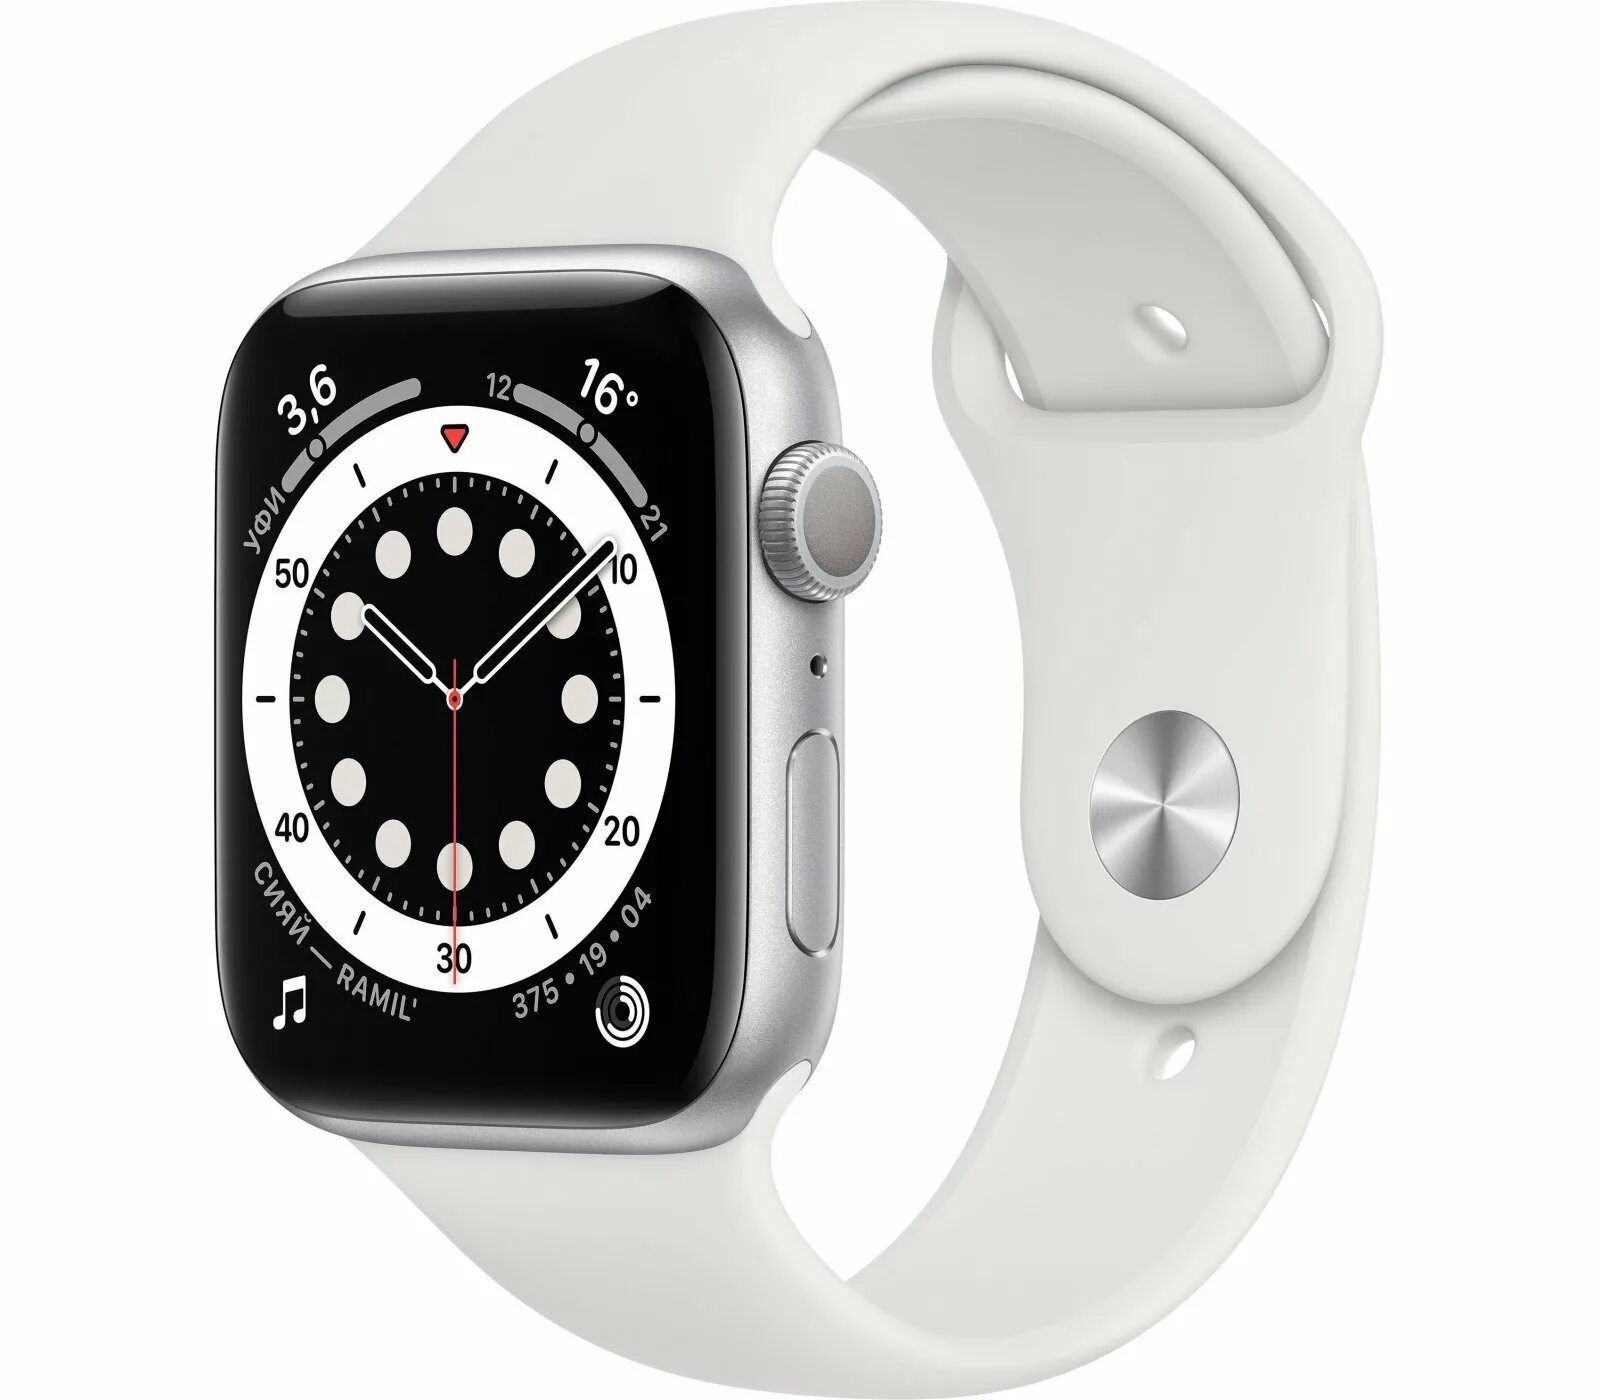 Apple watch se sport band. Apple watch Series 3 42 mm. Смарт-часы Jet Sport SW-4c, 1.54". Apple watch Series 6 40mm Gold Aluminum Case Pink Sand Sport Band. Умные часы Apple watch Series 6 GPS 44mm.